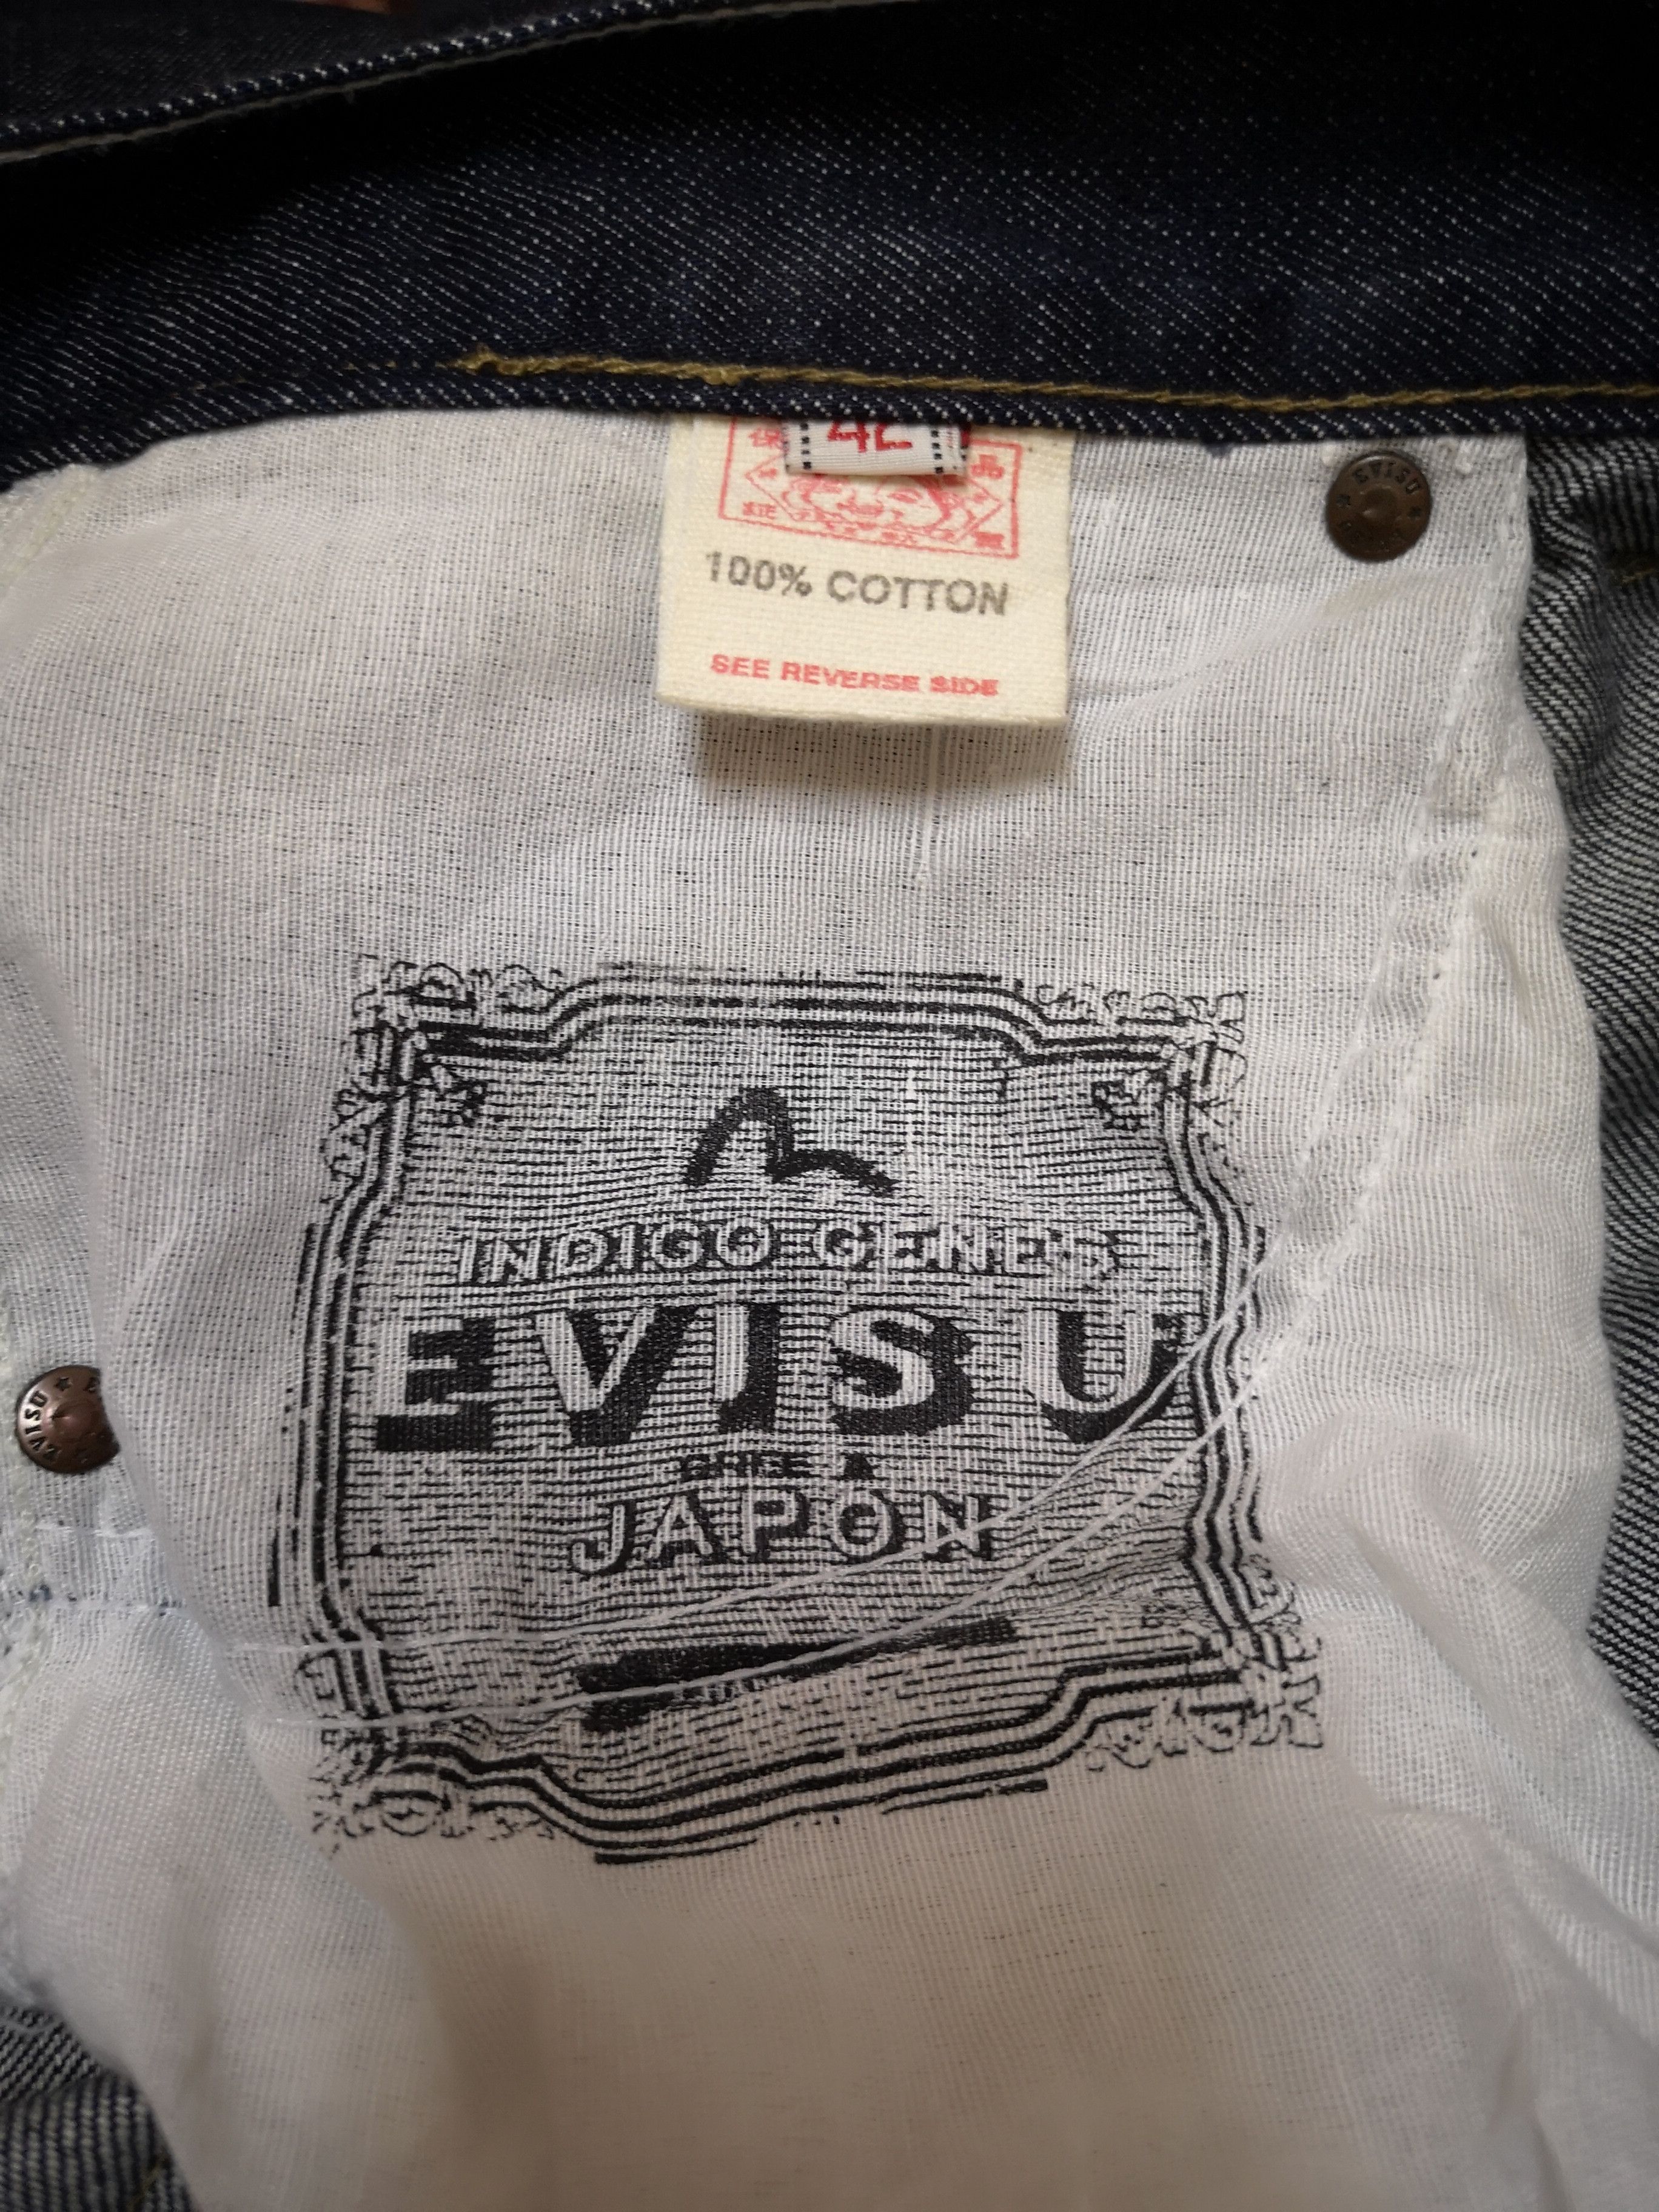 Puma Evisu x Puma Big Size Rare Jeans made in Turkey Size US 40 / EU 56 - 3 Thumbnail